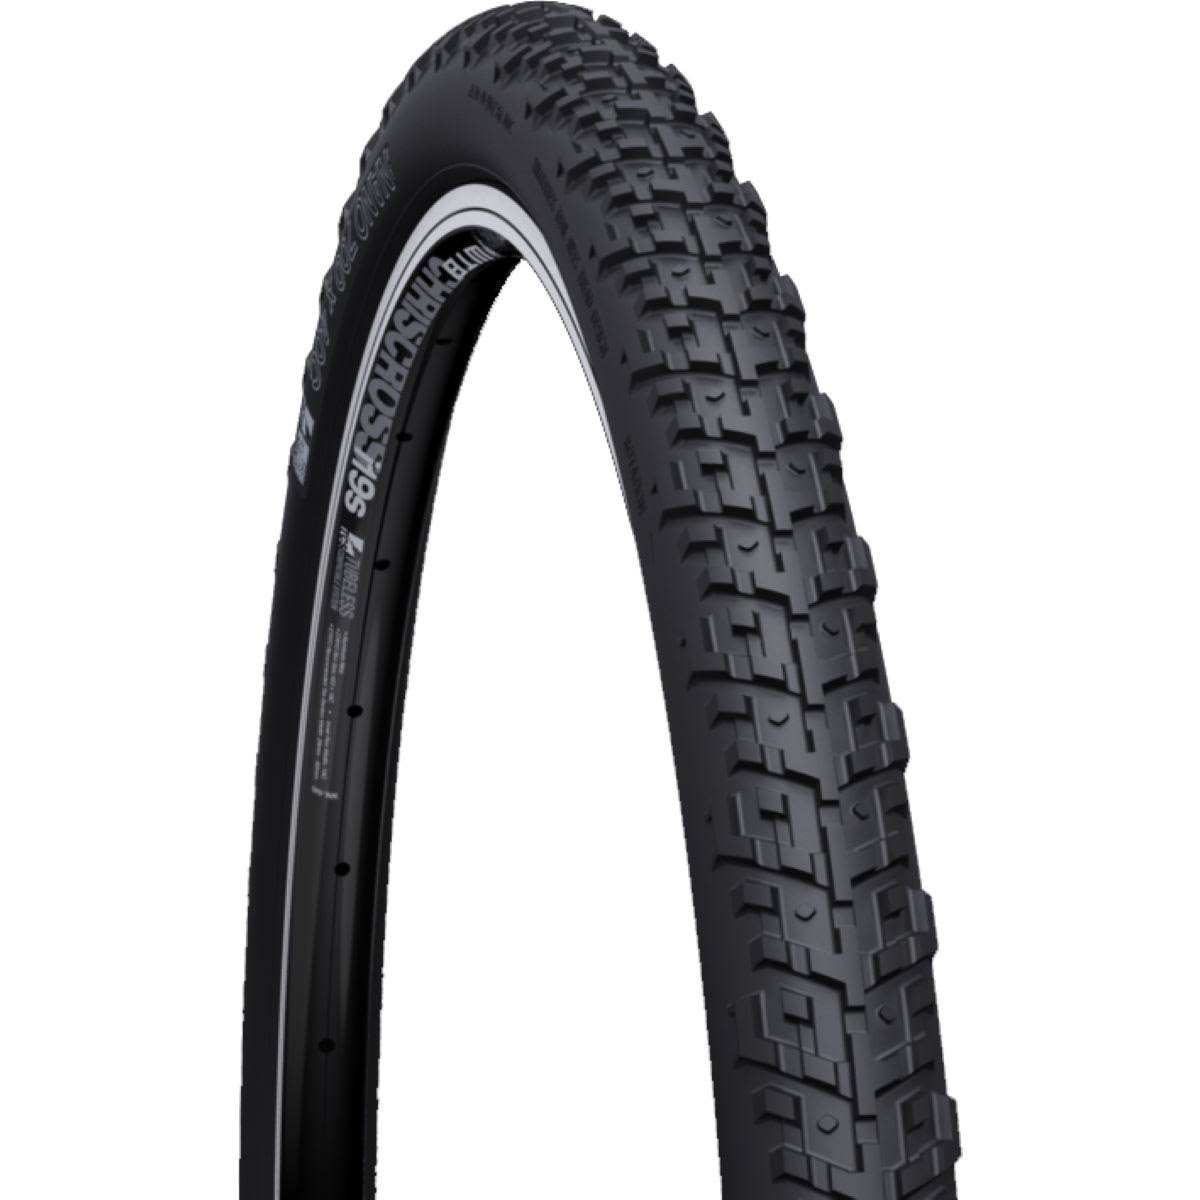 WTB Nano TCS Light and Fast Rolling Folding Cross Tire - 700 x 40c, Black